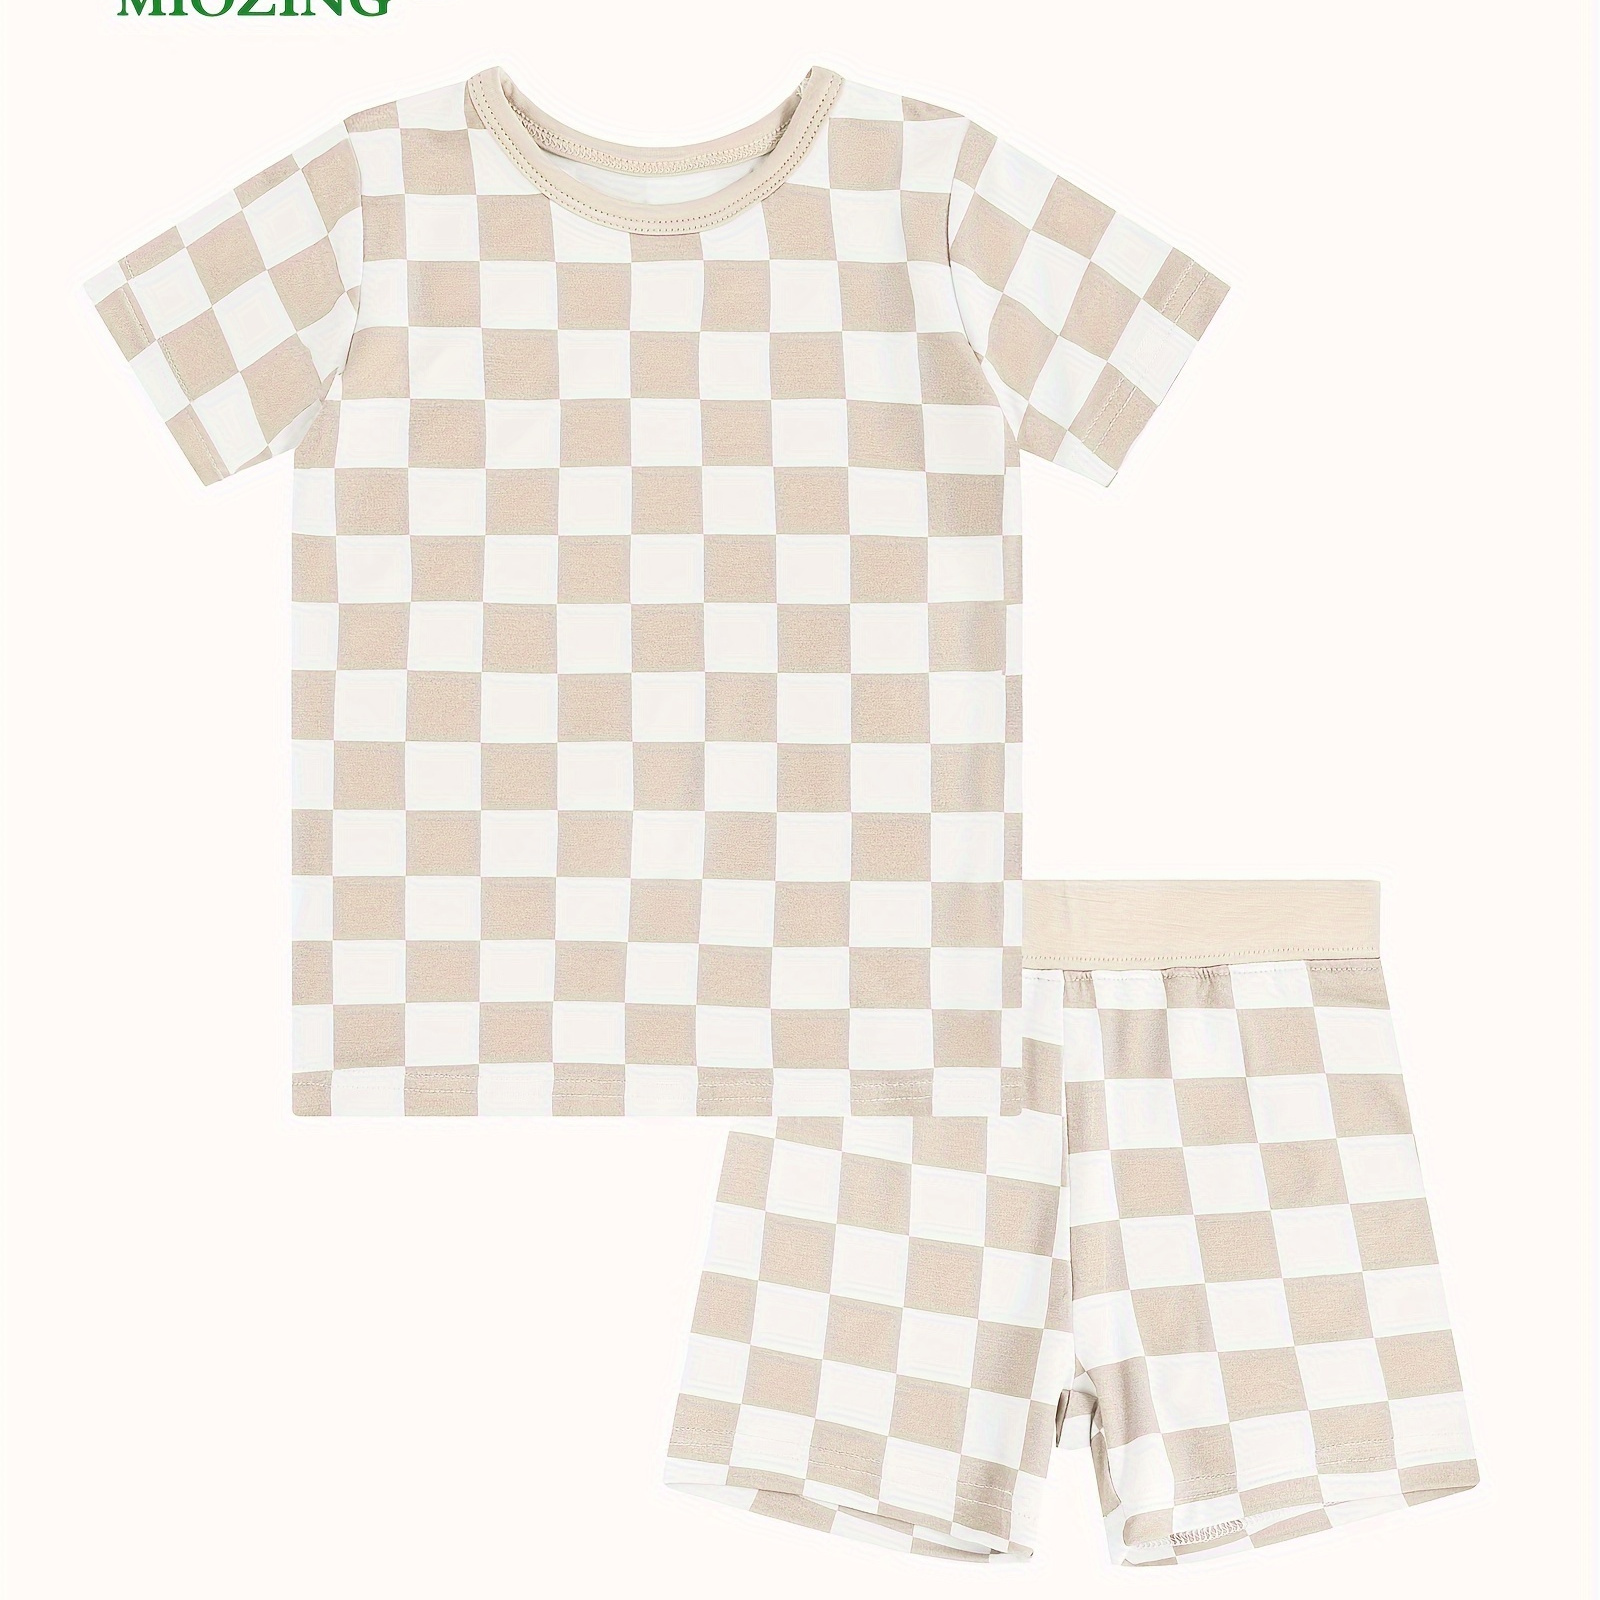 

Miozing Bamboo Fiber 2pcs, Toddler Kid's T-shirt & Comfy Shorts, Light Grey Checkerboard Pattern, Baby Boy's Clothes